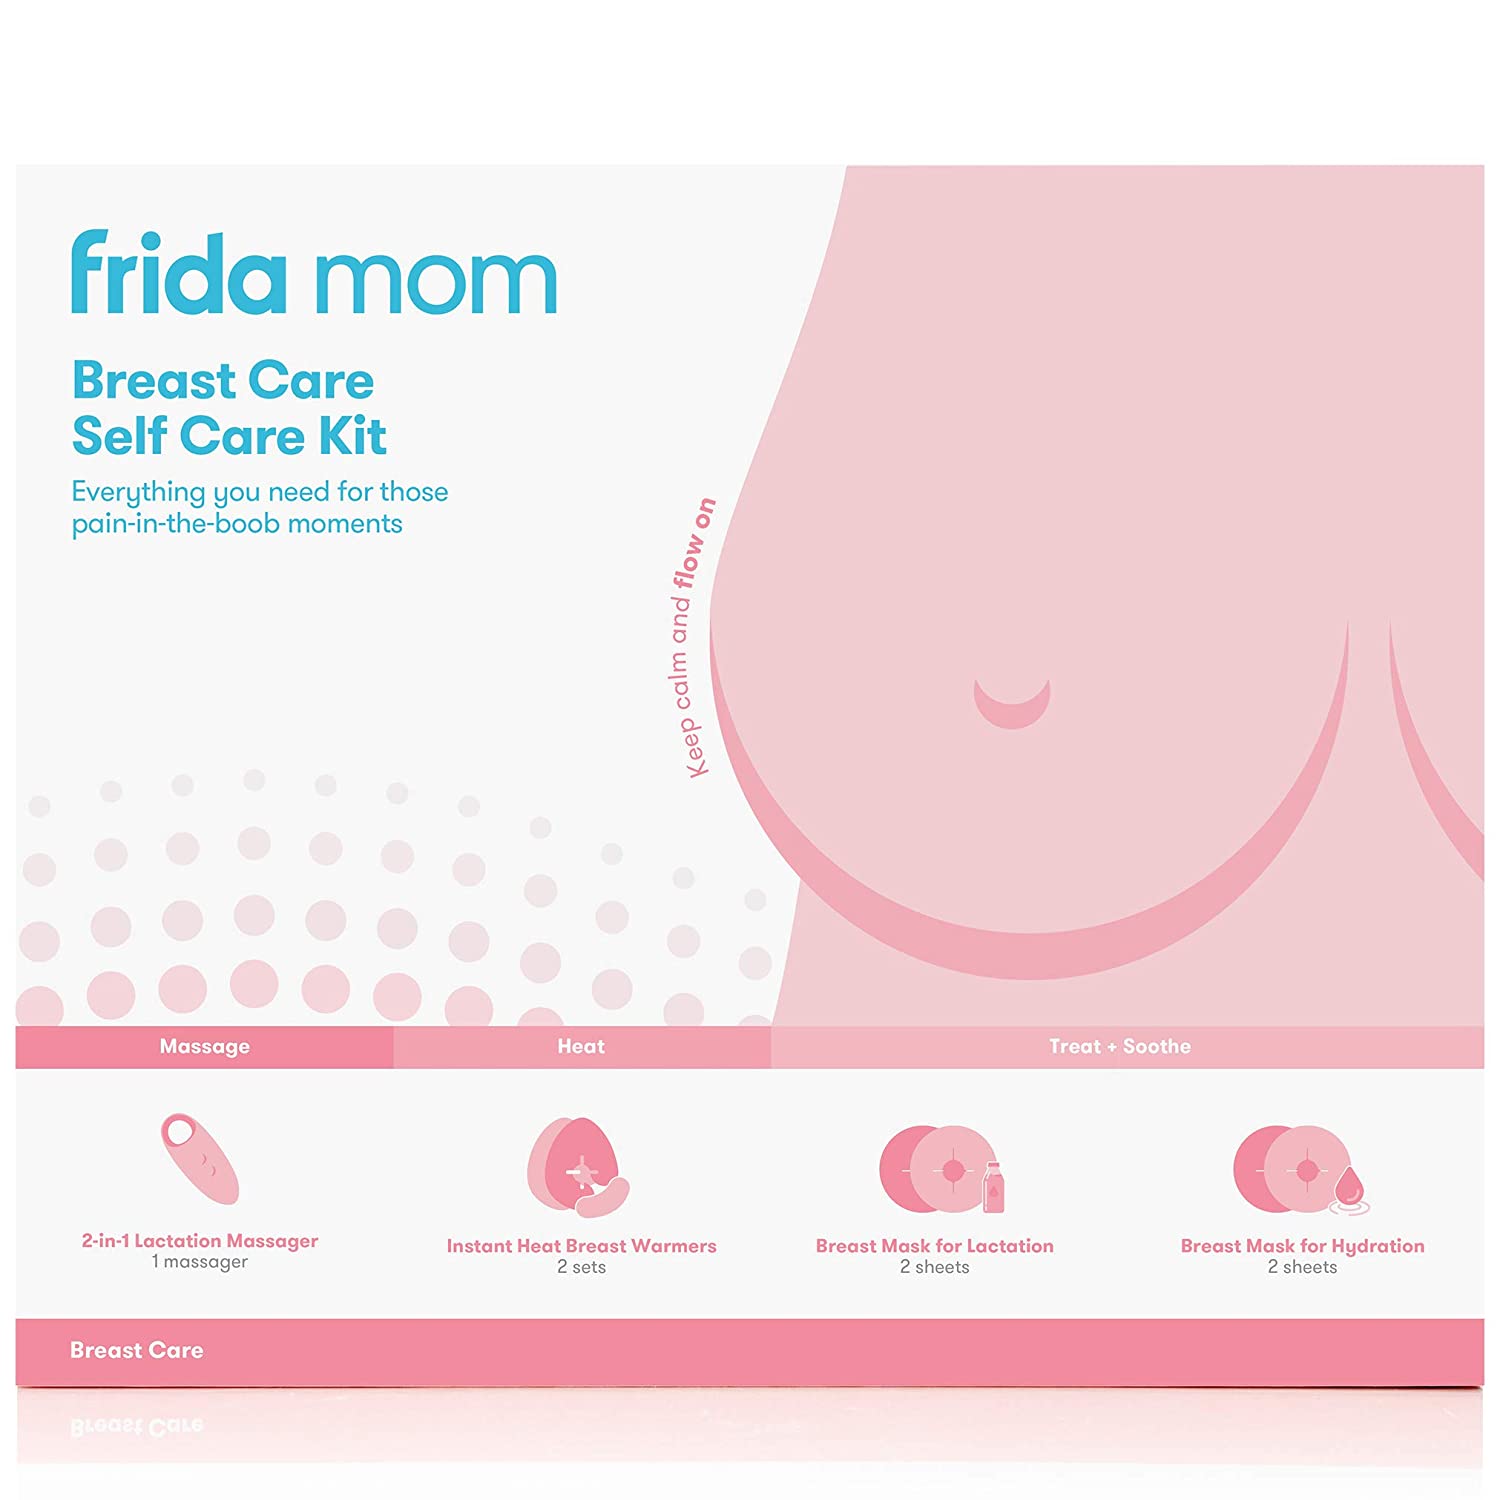 Breastfeeding Starter Kit